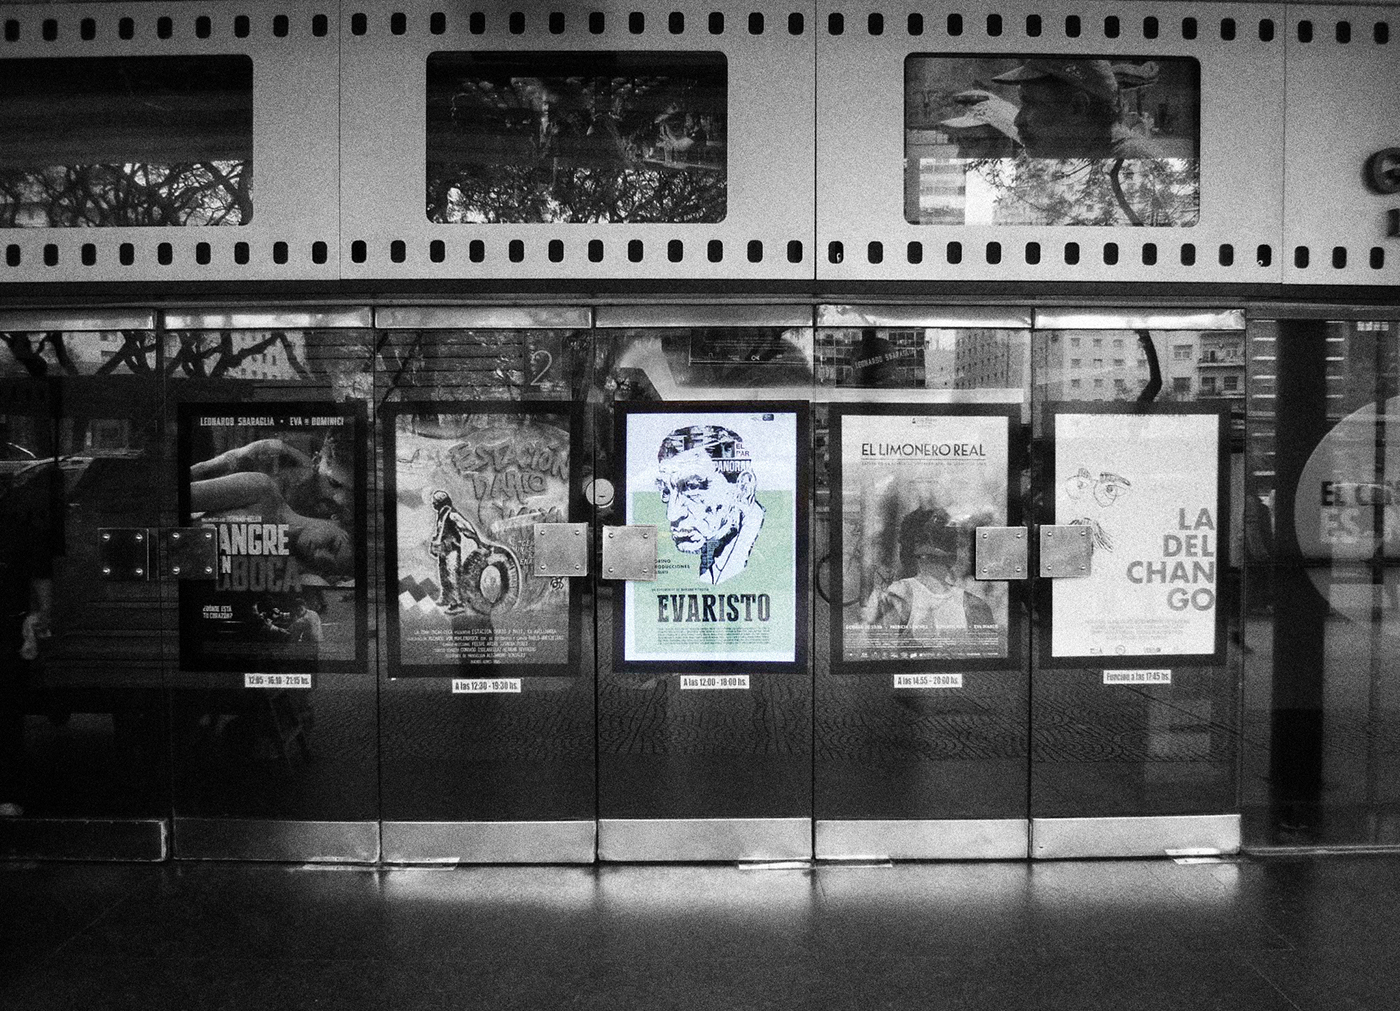 Documentary  Film   cine tipography identity 50's poster Cinema incaa documental